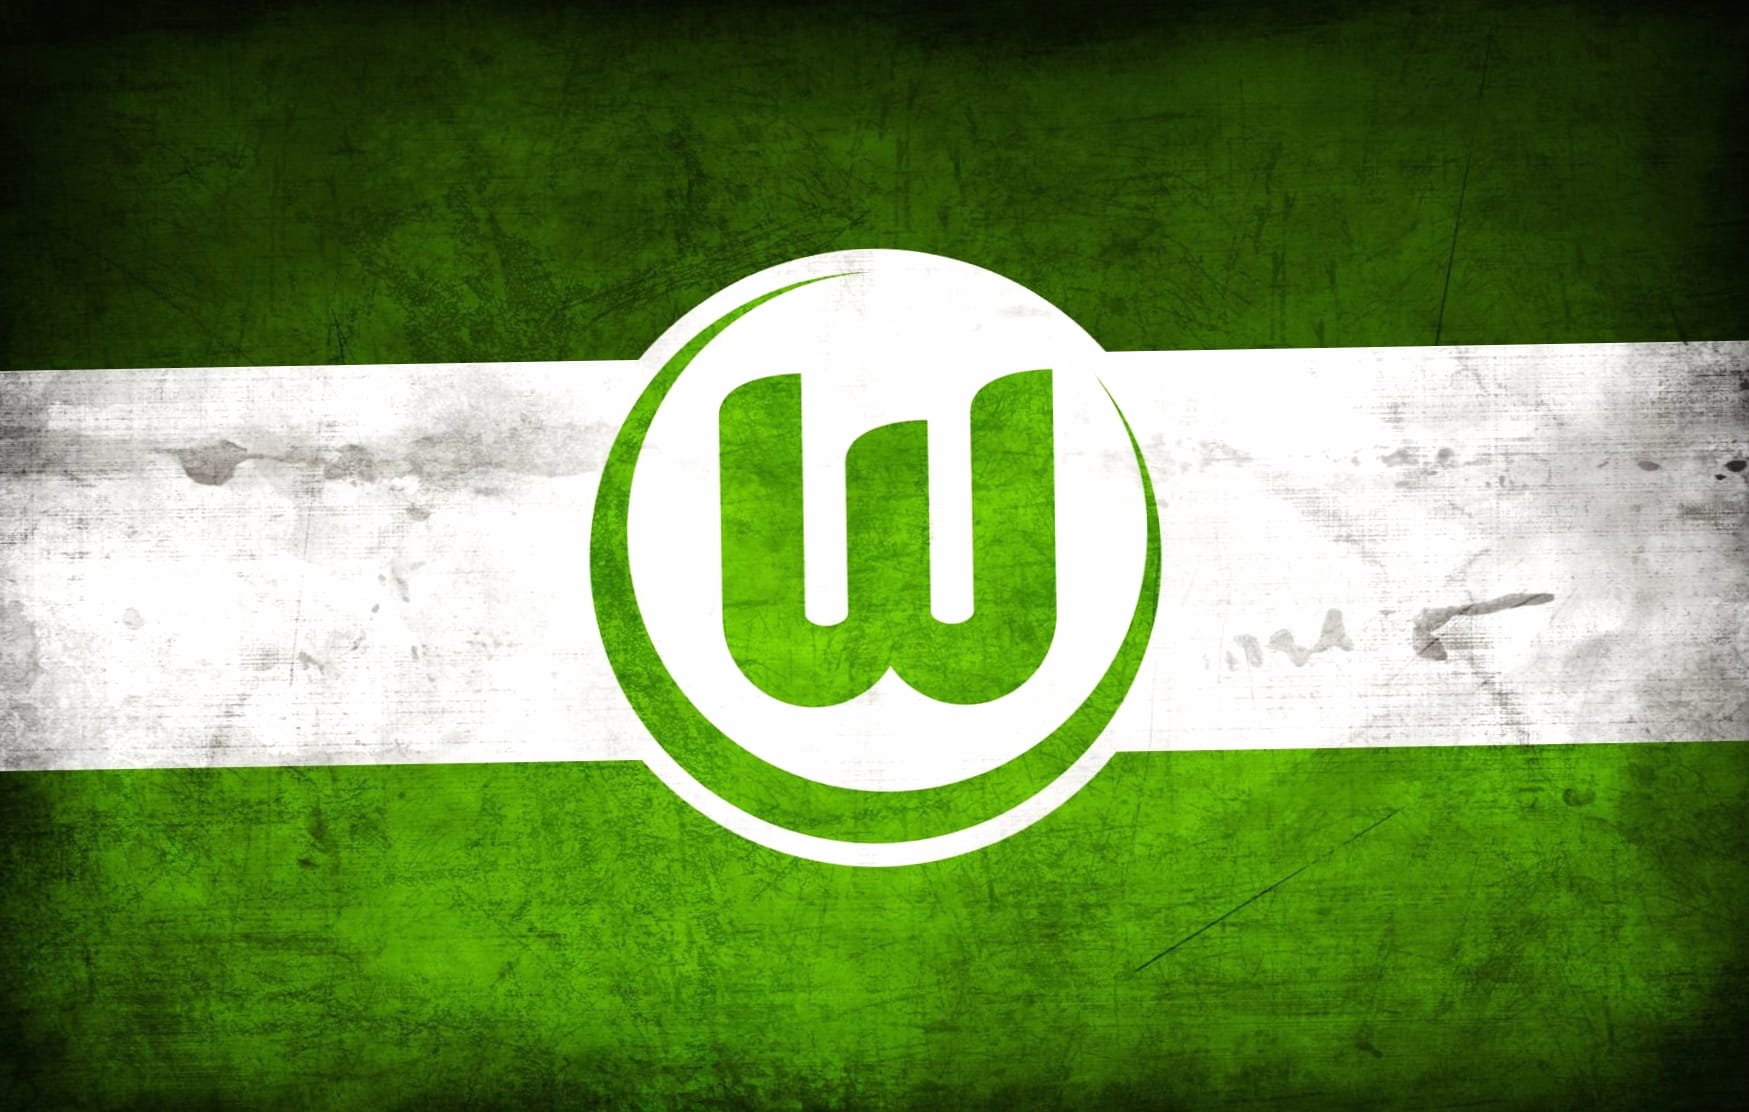 VfL Wolfsburg at 2048 x 2048 iPad size wallpapers HD quality